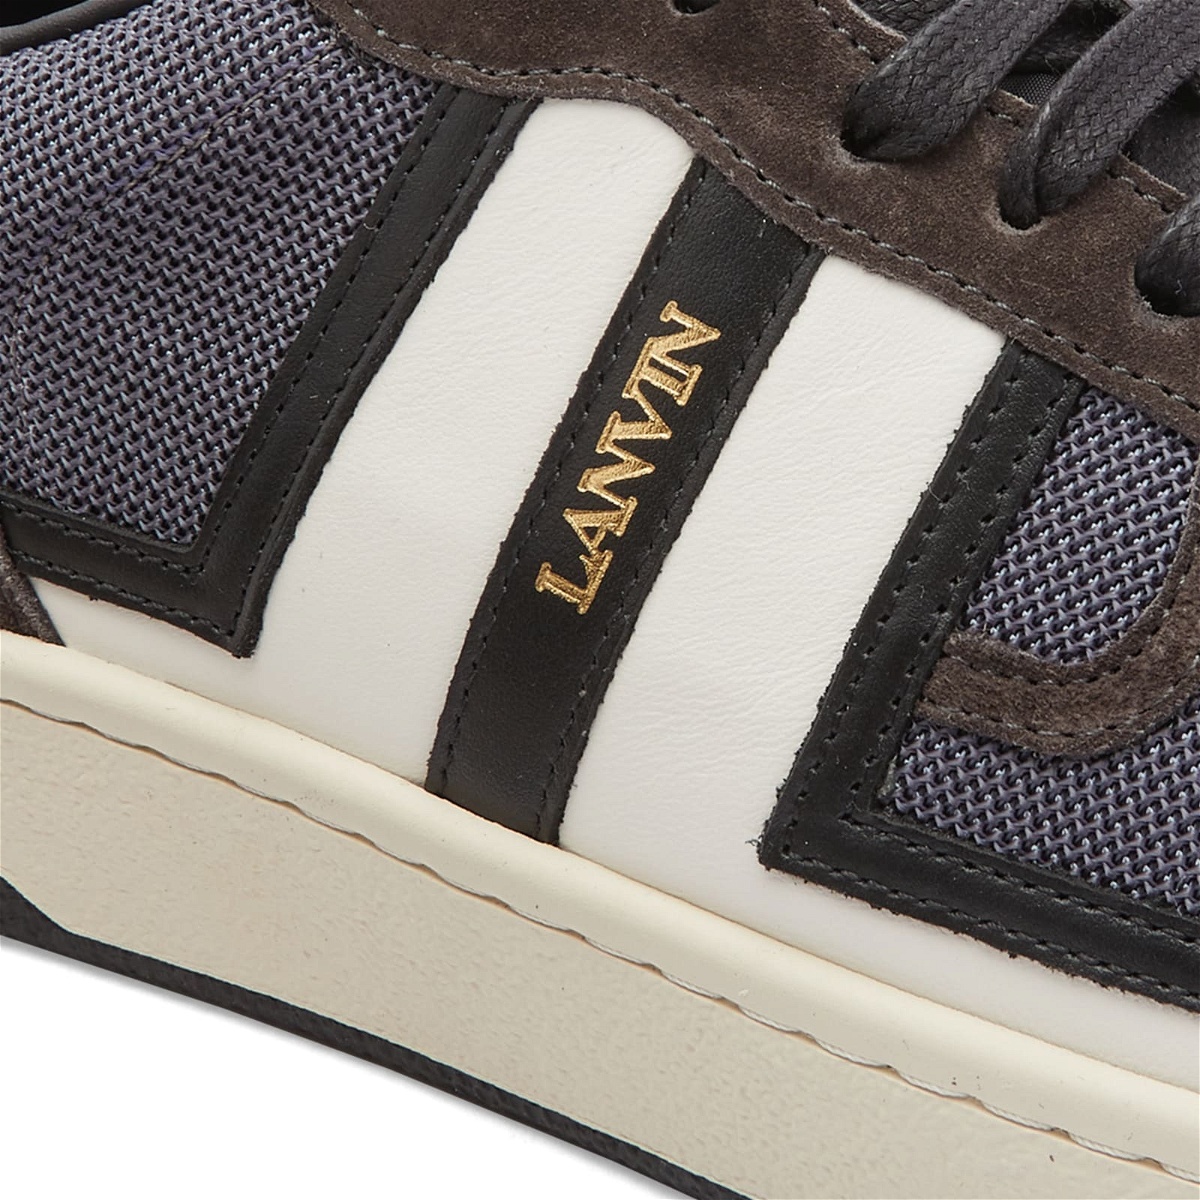 Lanvin Men's Clay Court Sneakers in Anthracite Grey/ Milk Lanvin